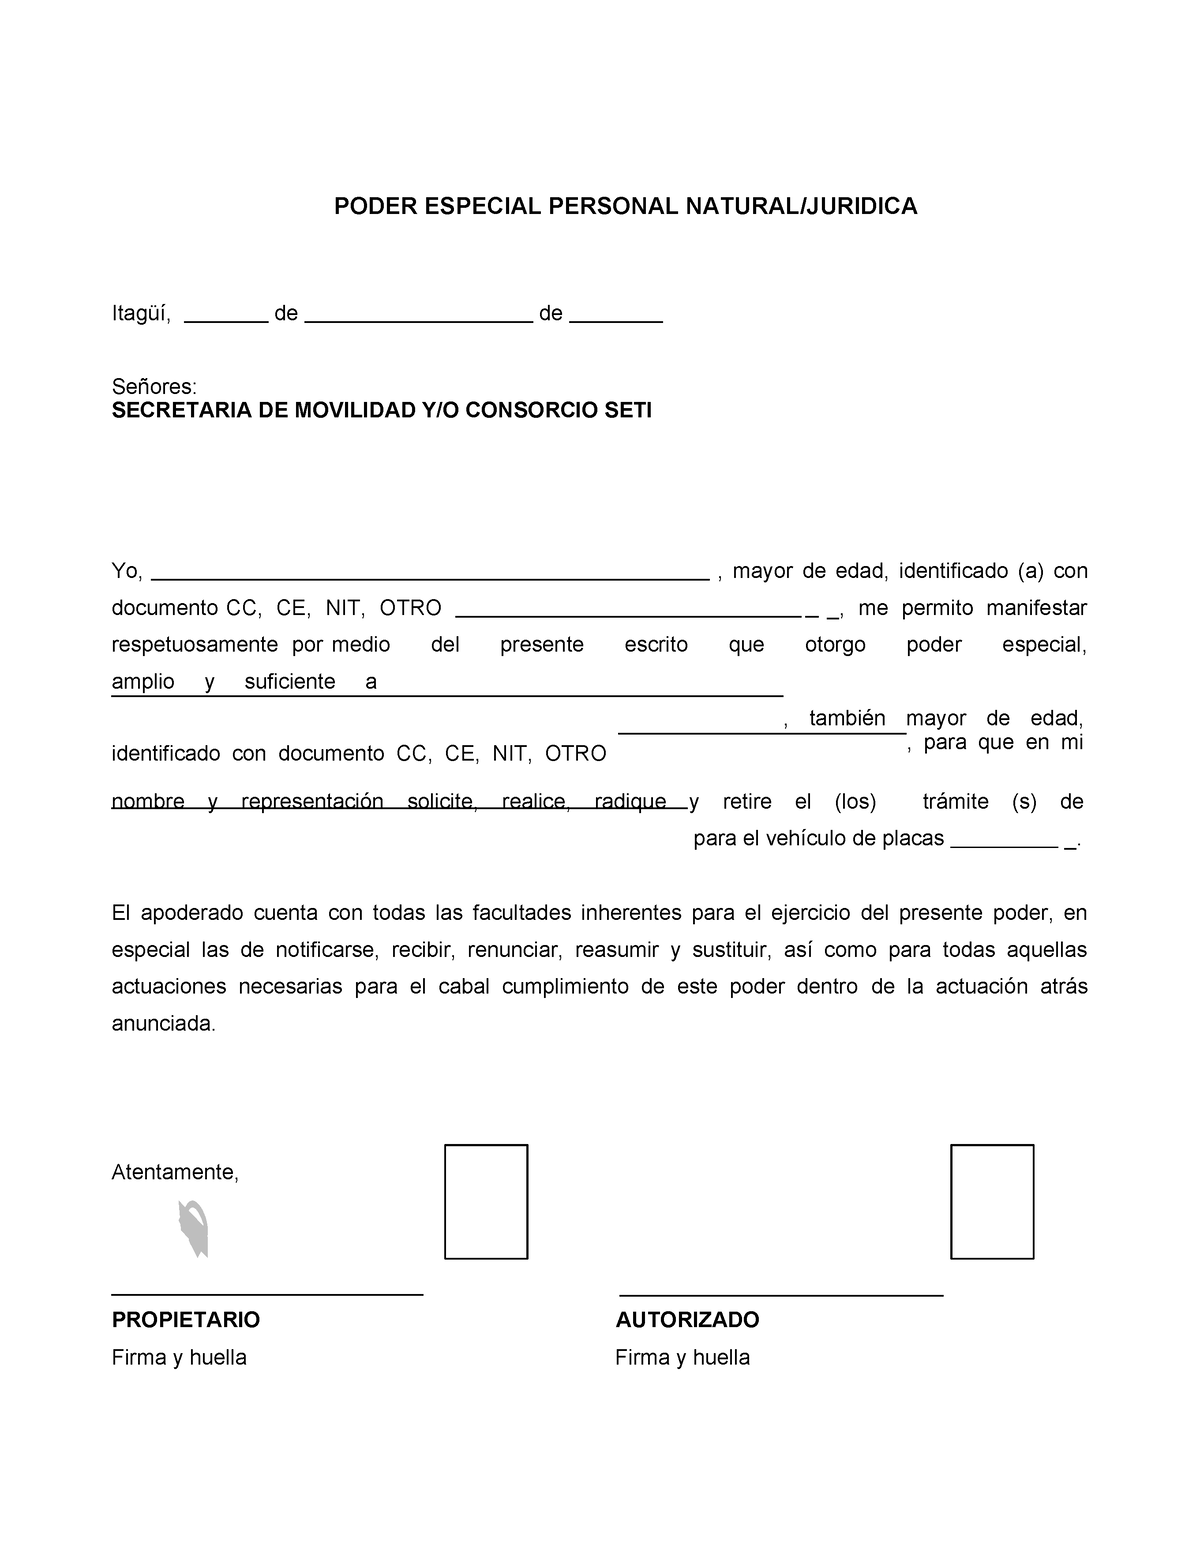 Formato Poder Especial Personal Natural Juridica - PODER ESPECIAL PERSONAL  NATURAL/JURIDICA Itagüí, - Studocu